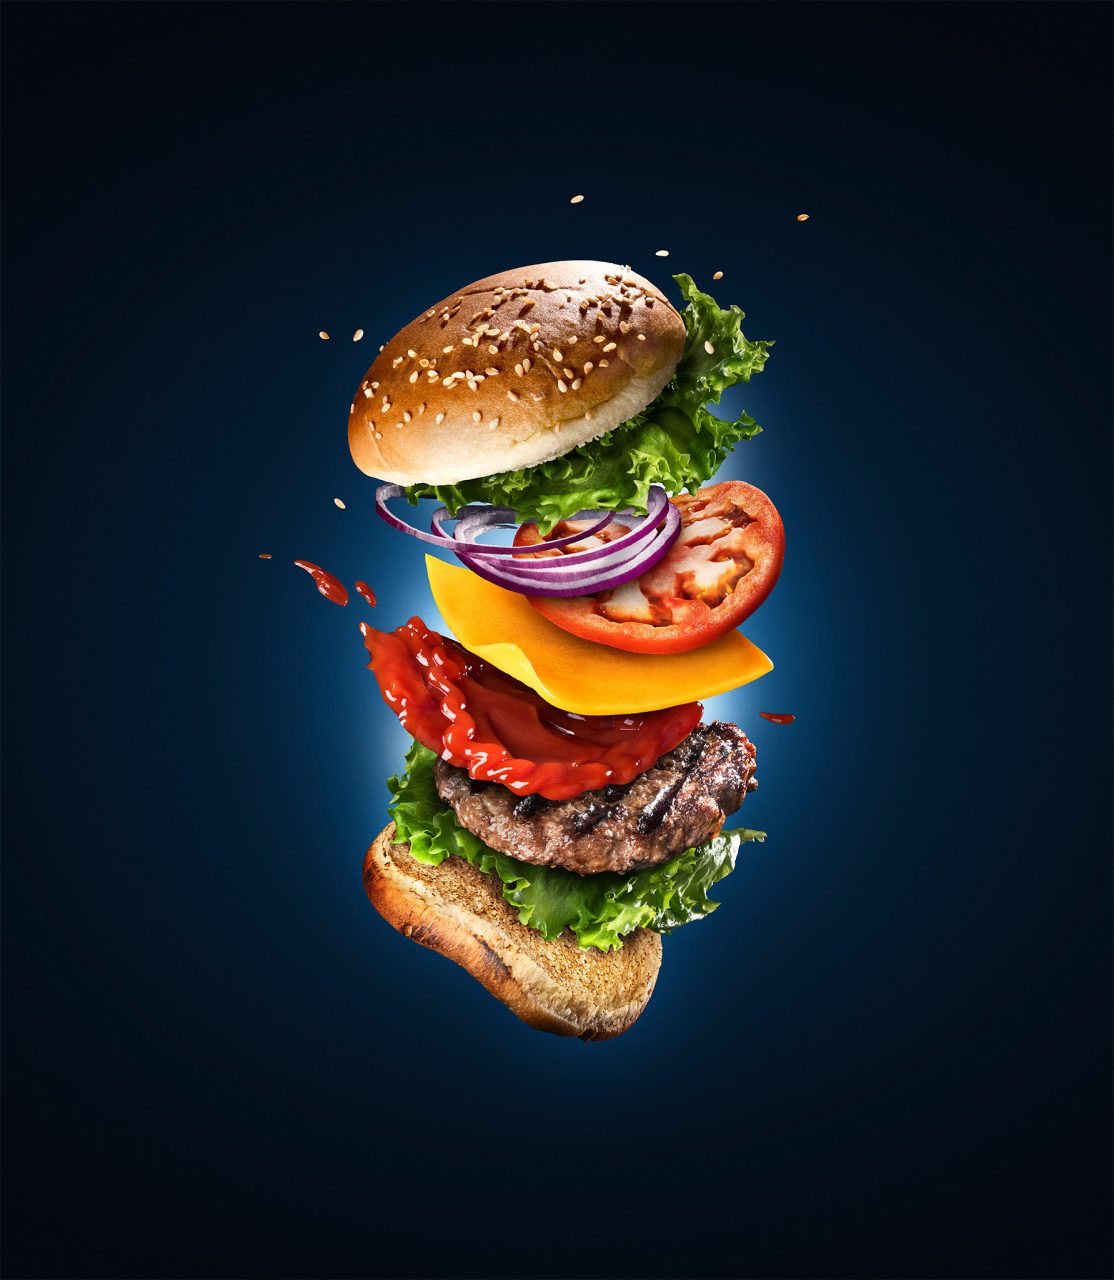 Creative Food Photography: Flying Burger - Workshop #68